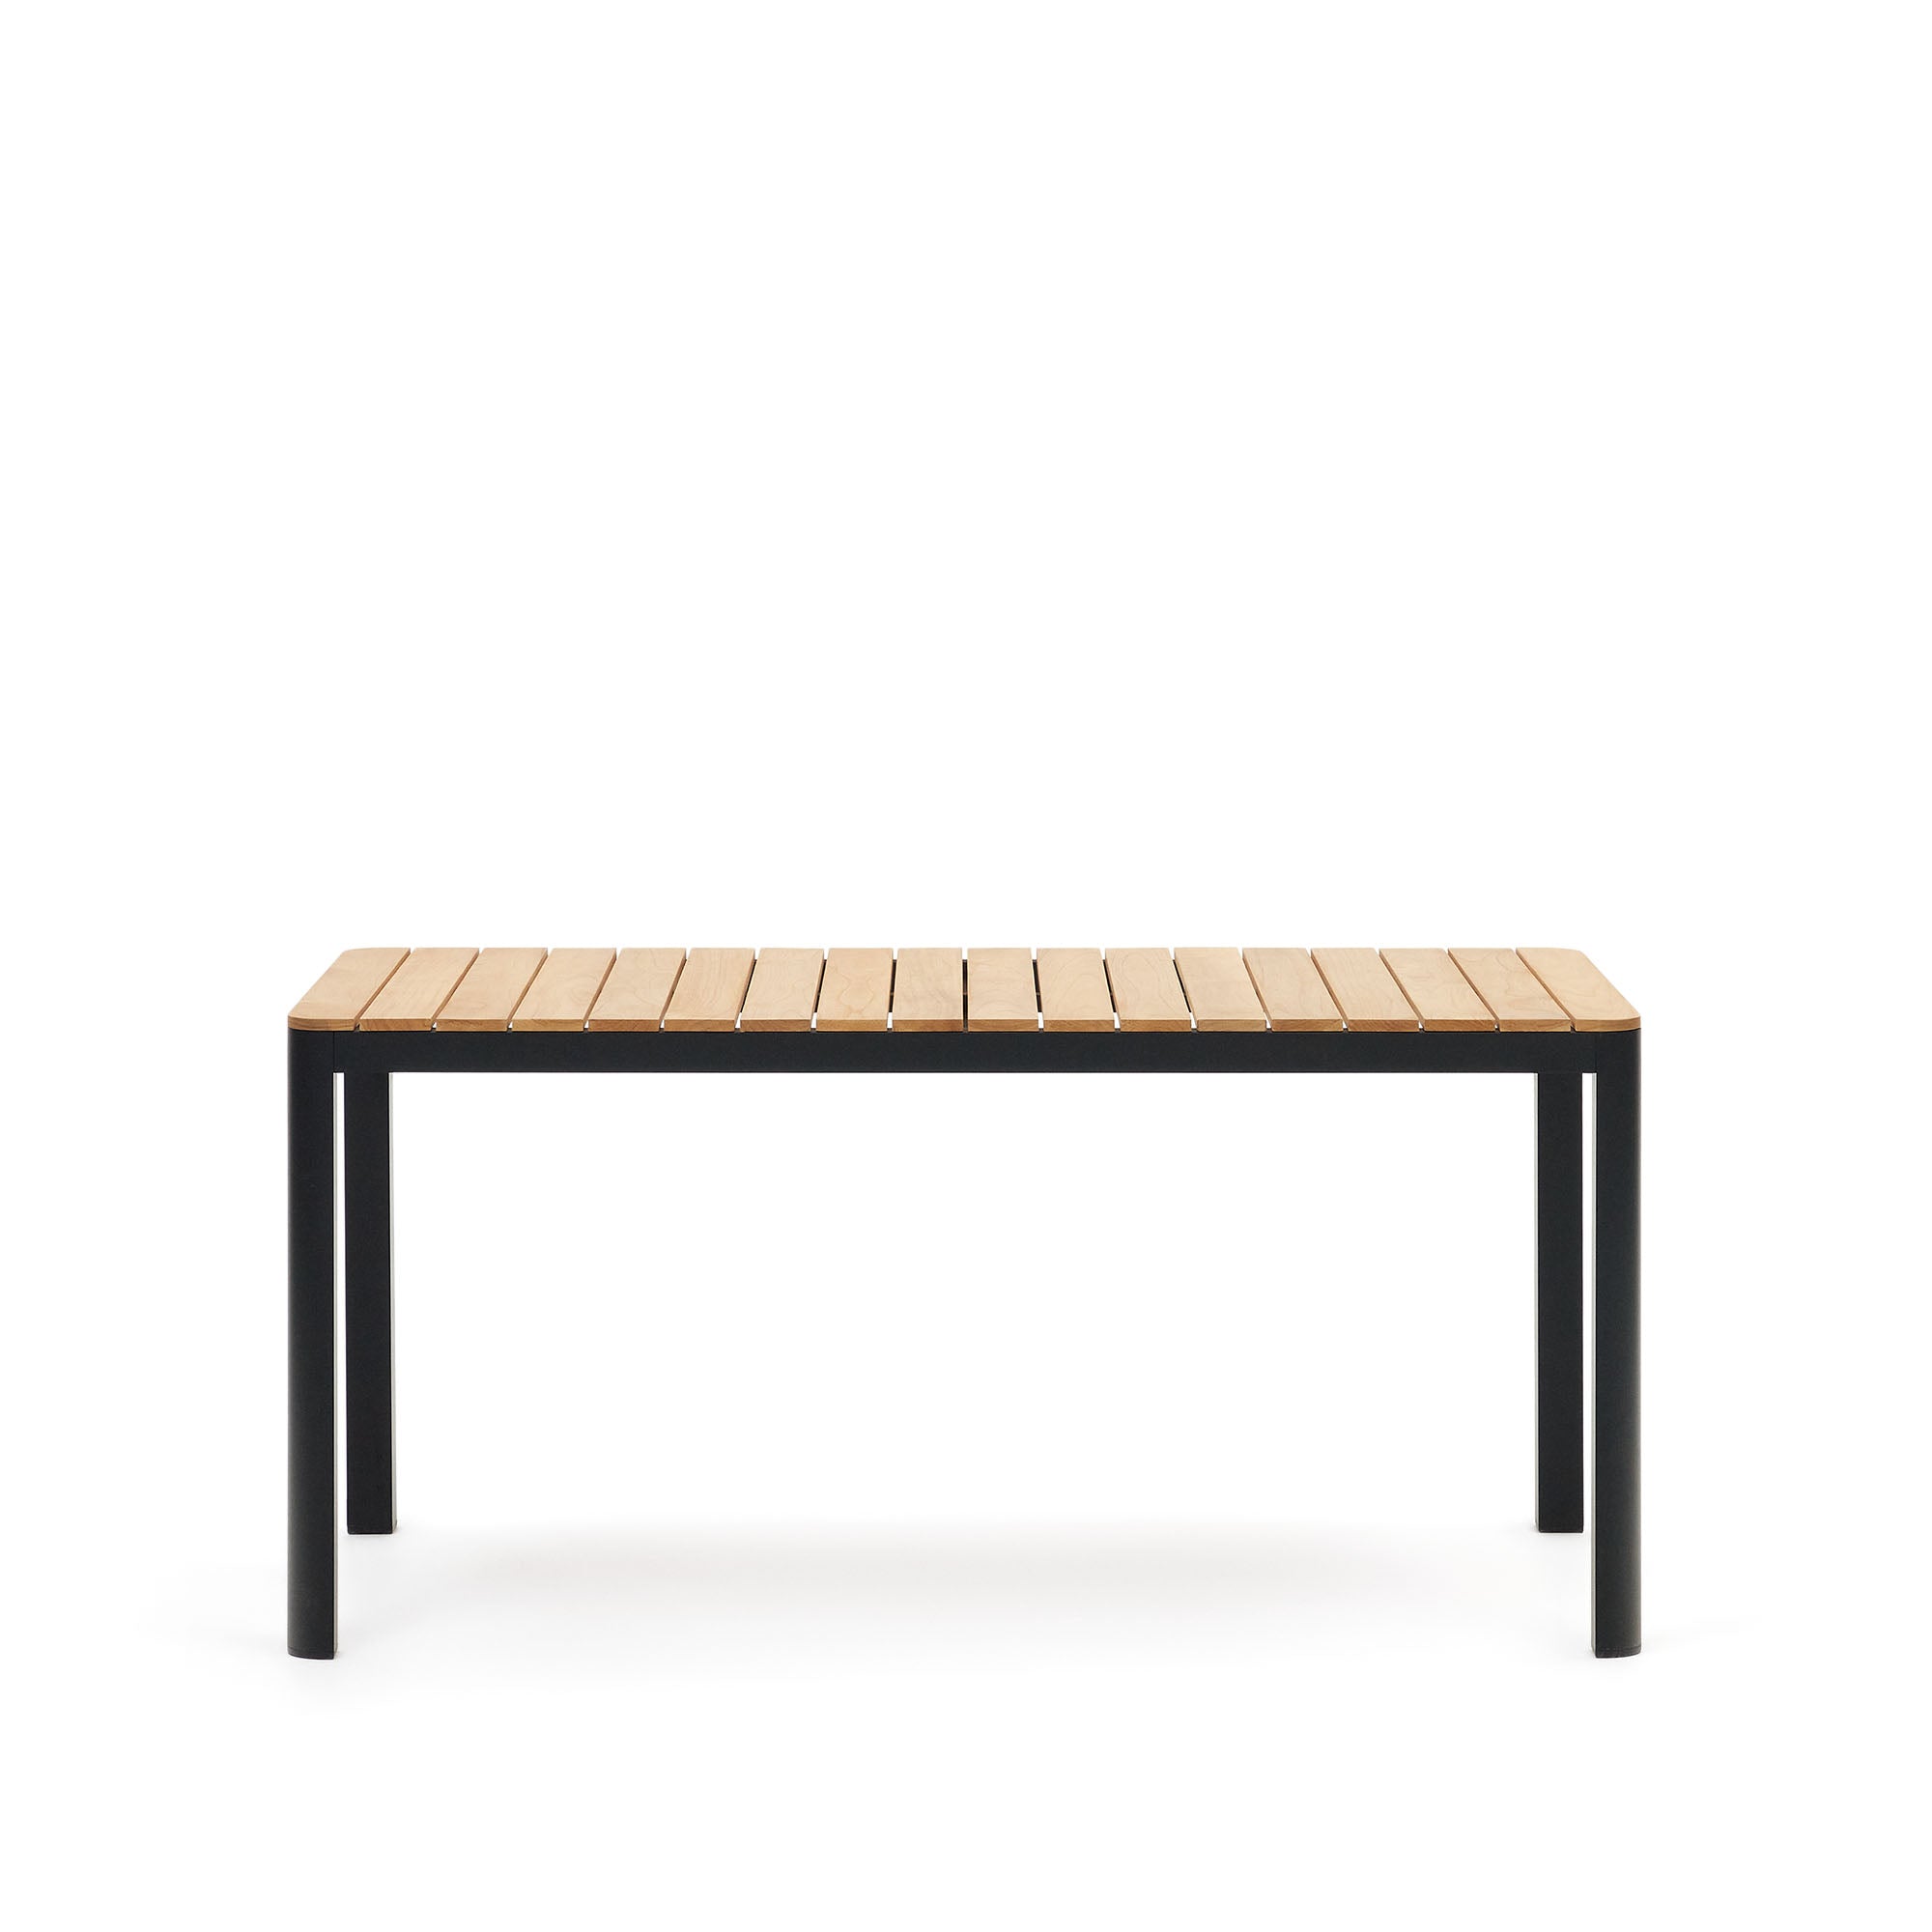 Bona aluminium and solid teak table, 100% outdoor suitable with black finish, 160 x 90 cm